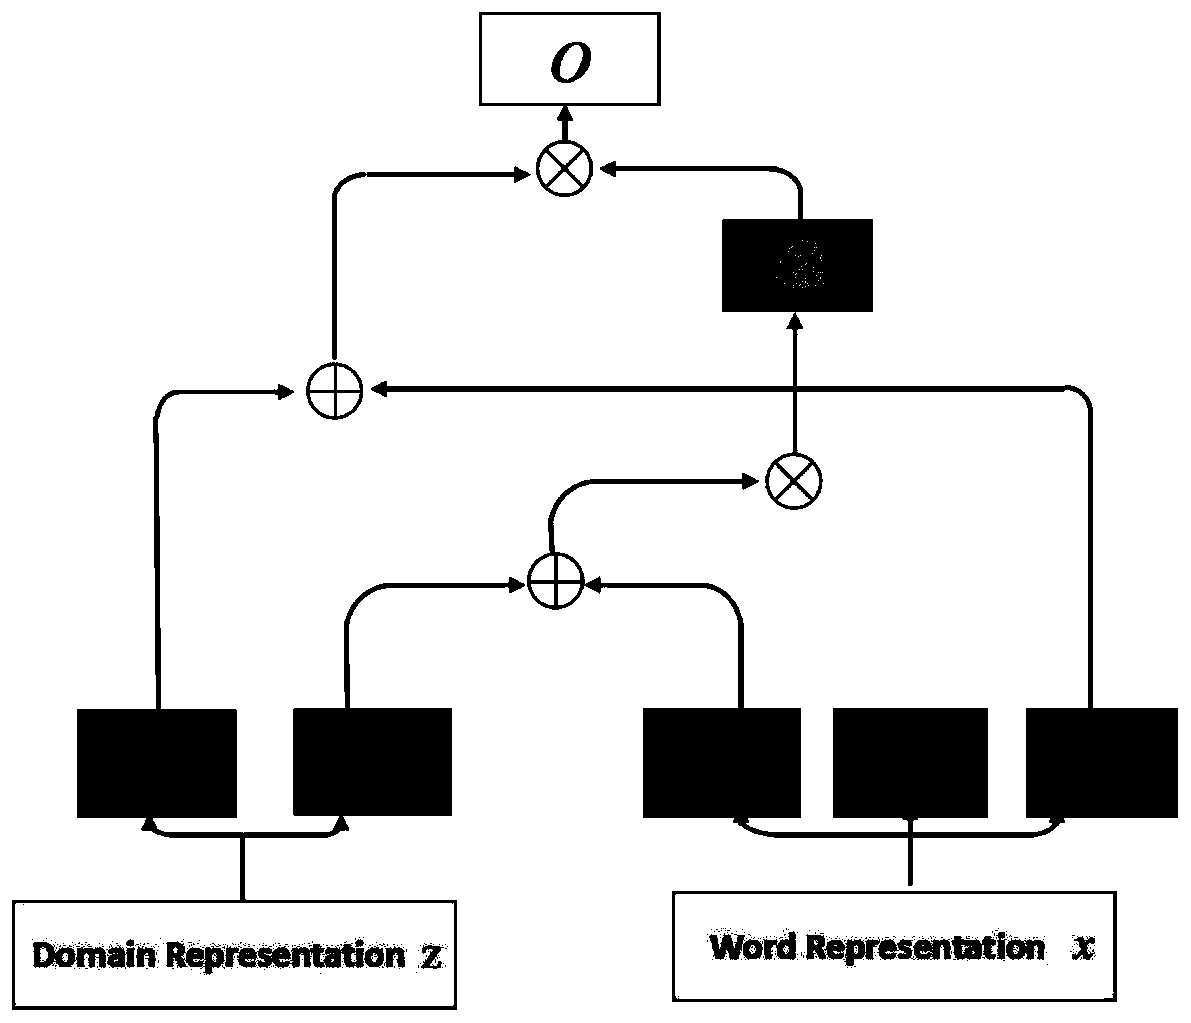 Multi-field neural machine translation method based on self-attention mechanism